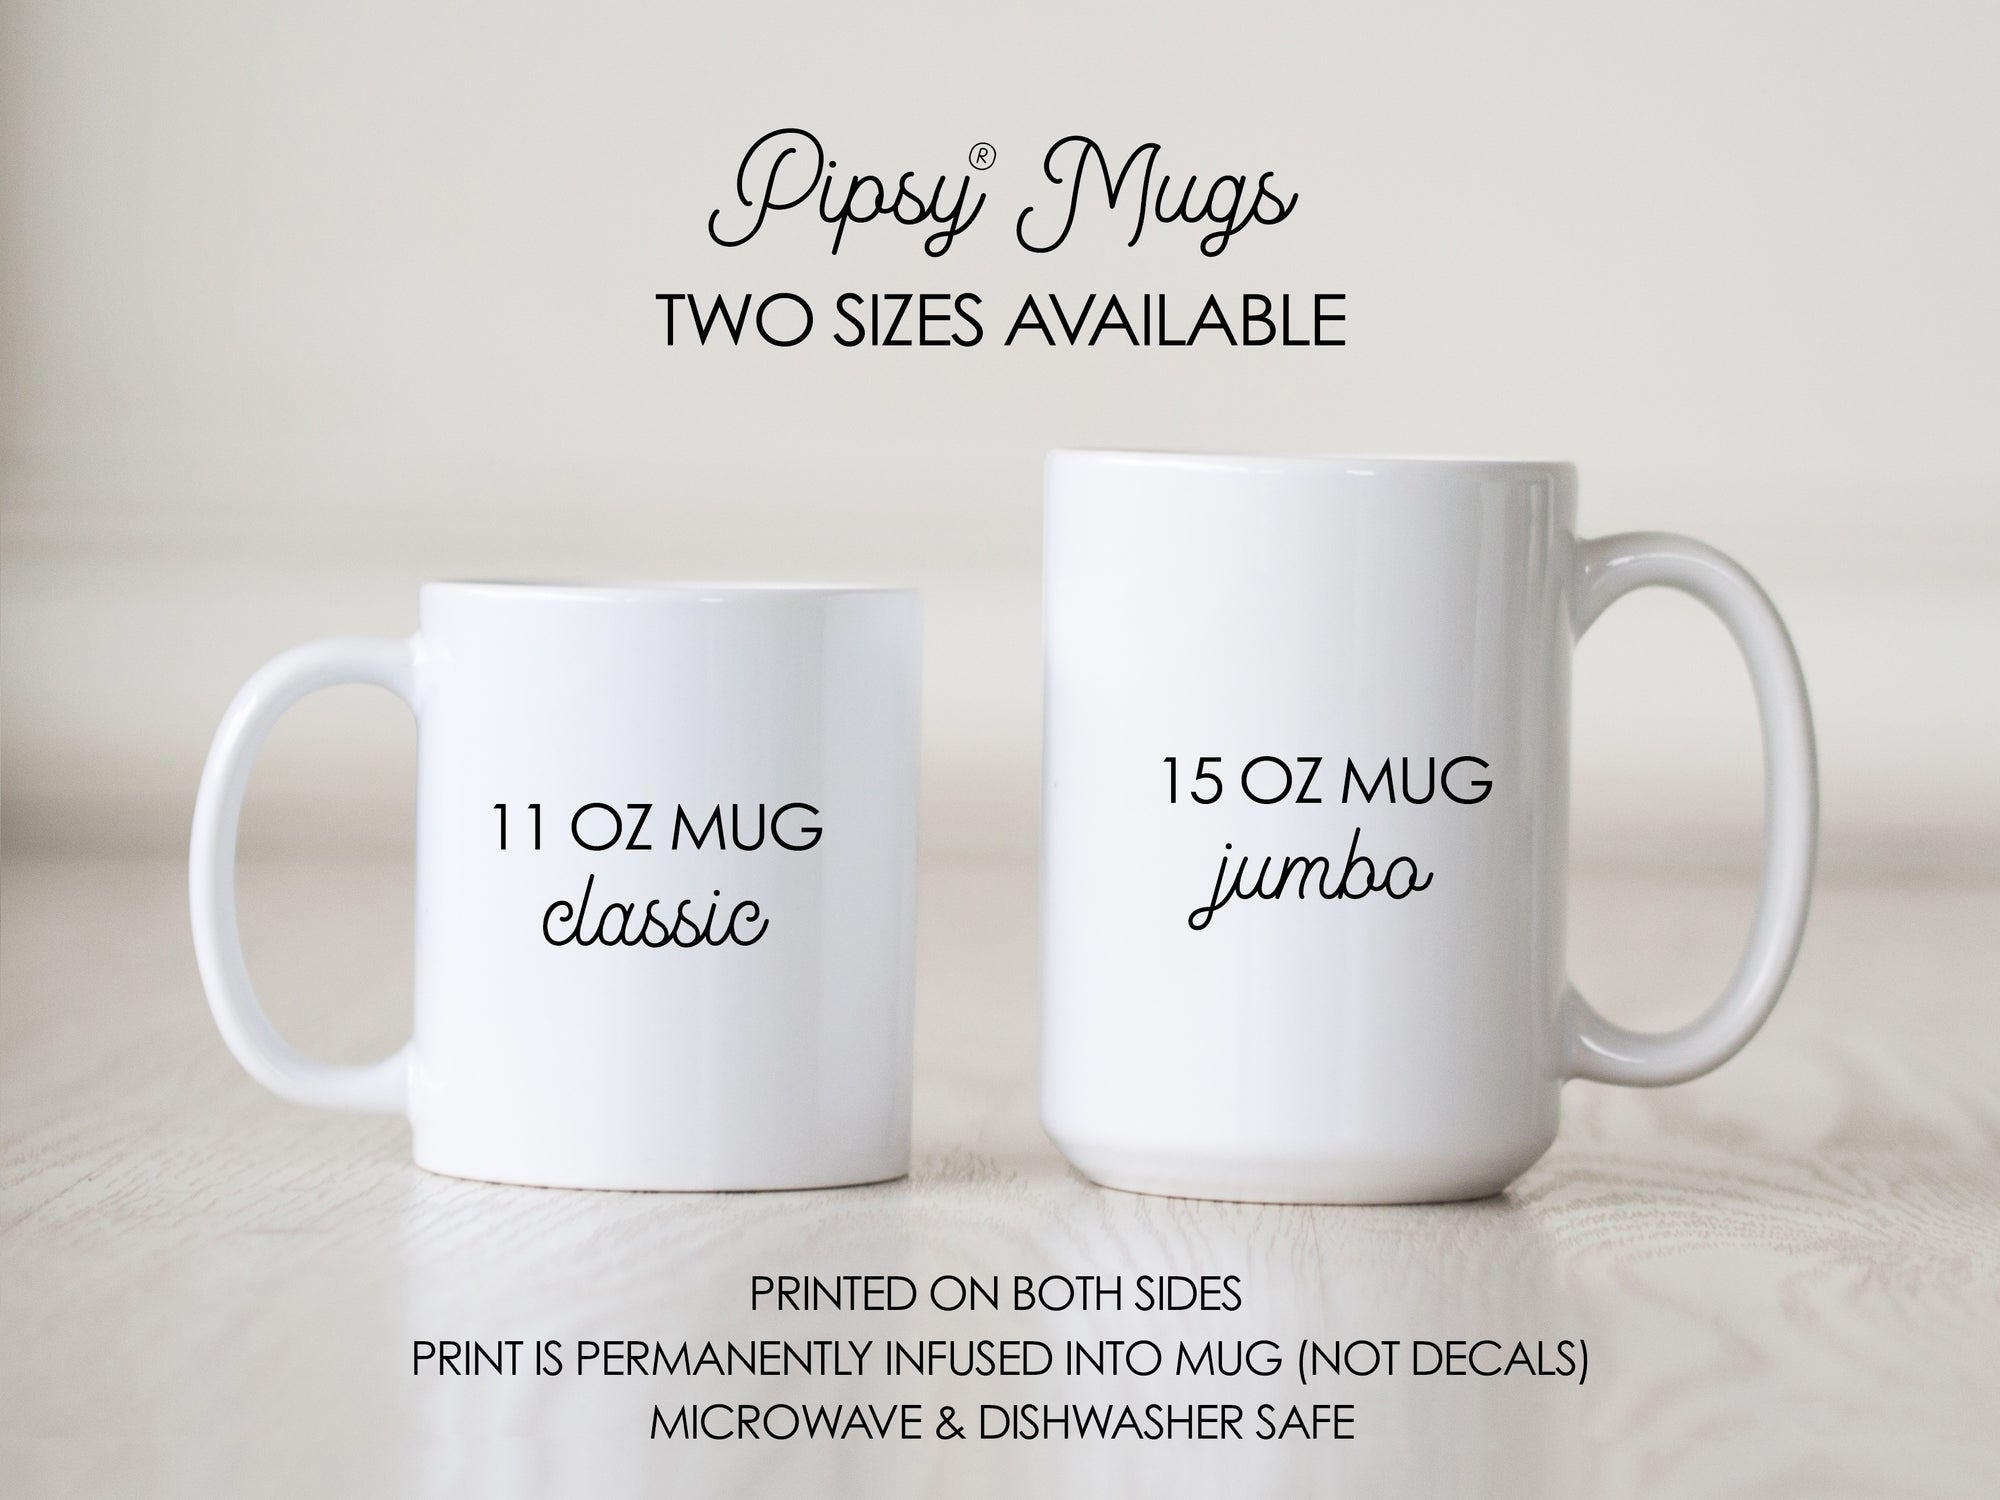 Dream Bigly Coffee Mug